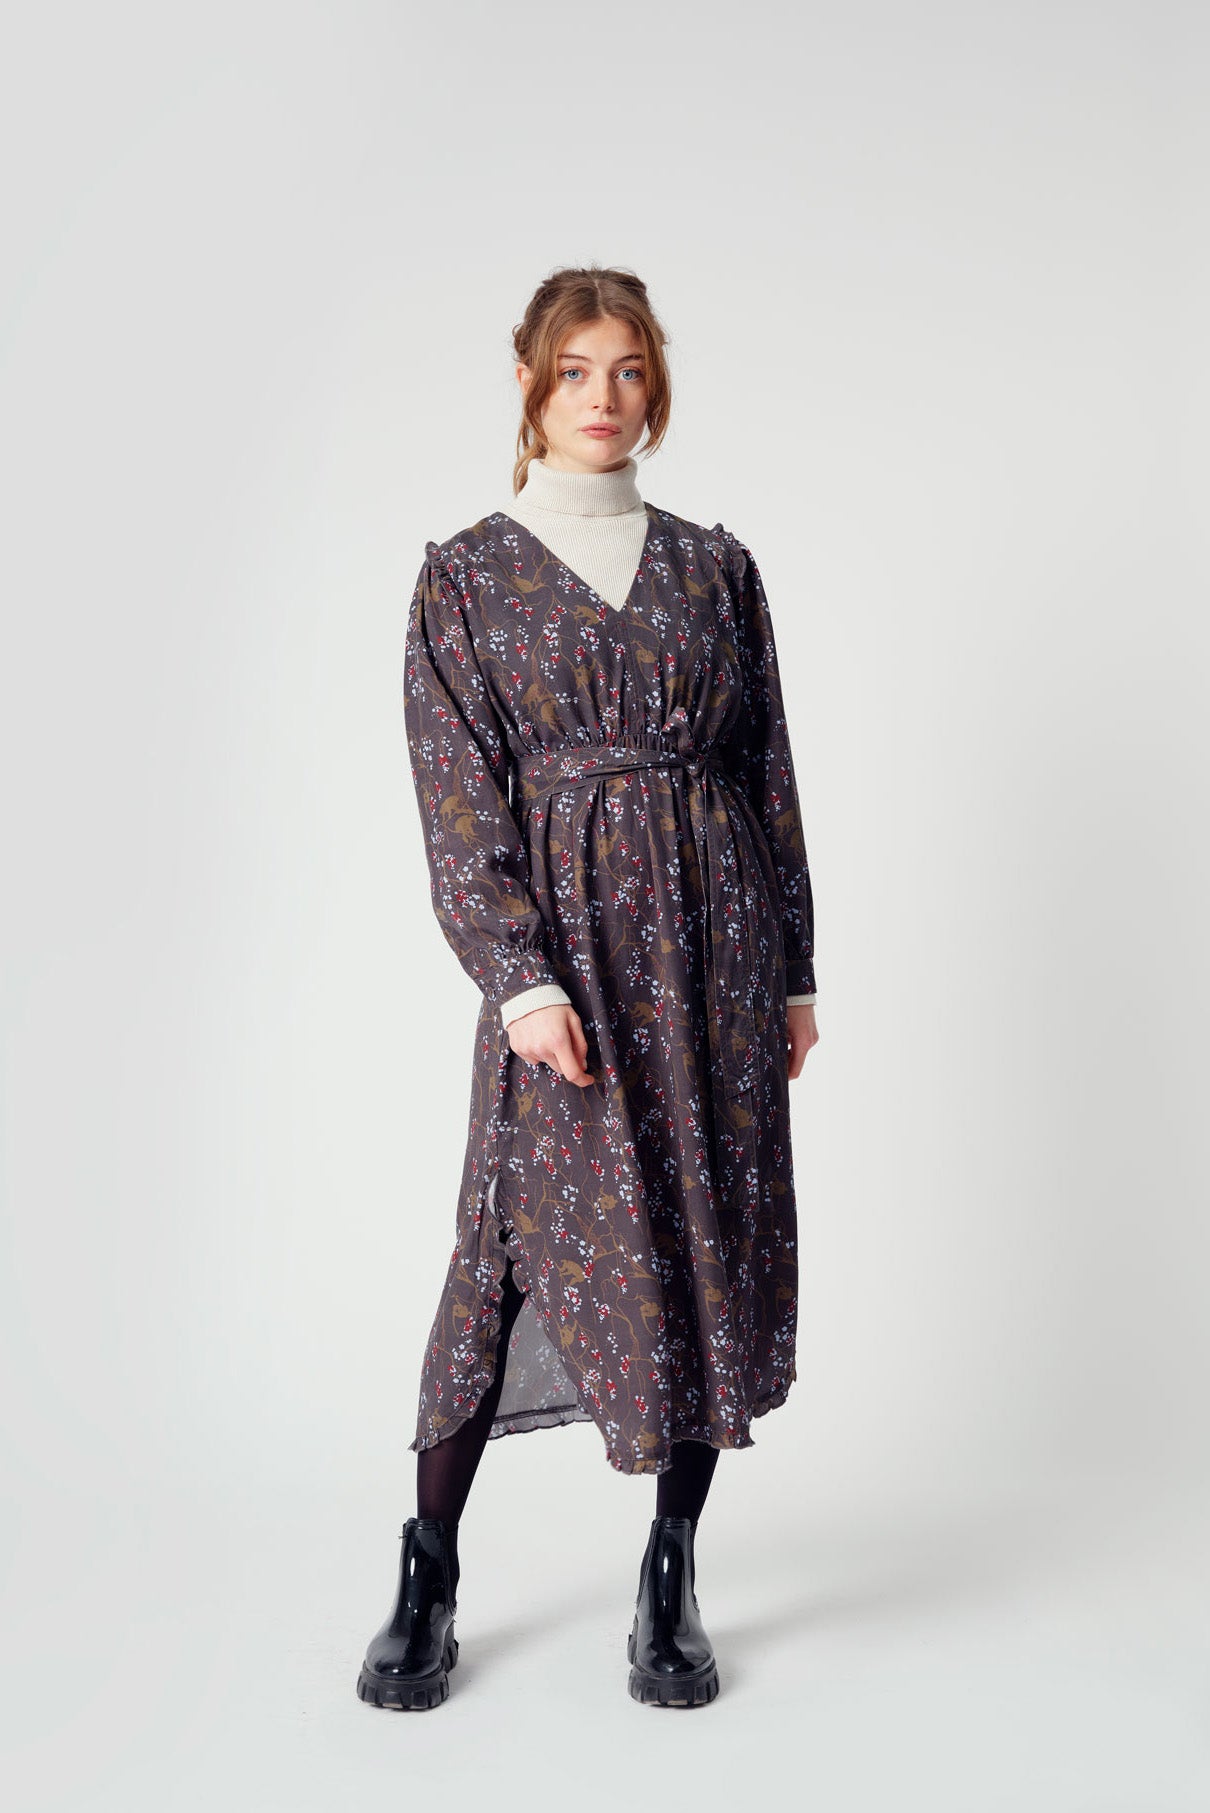 ALINA Womens Tencel Winter Jungle Ivy Dress, Size 1 / UK 8 / EUR 36